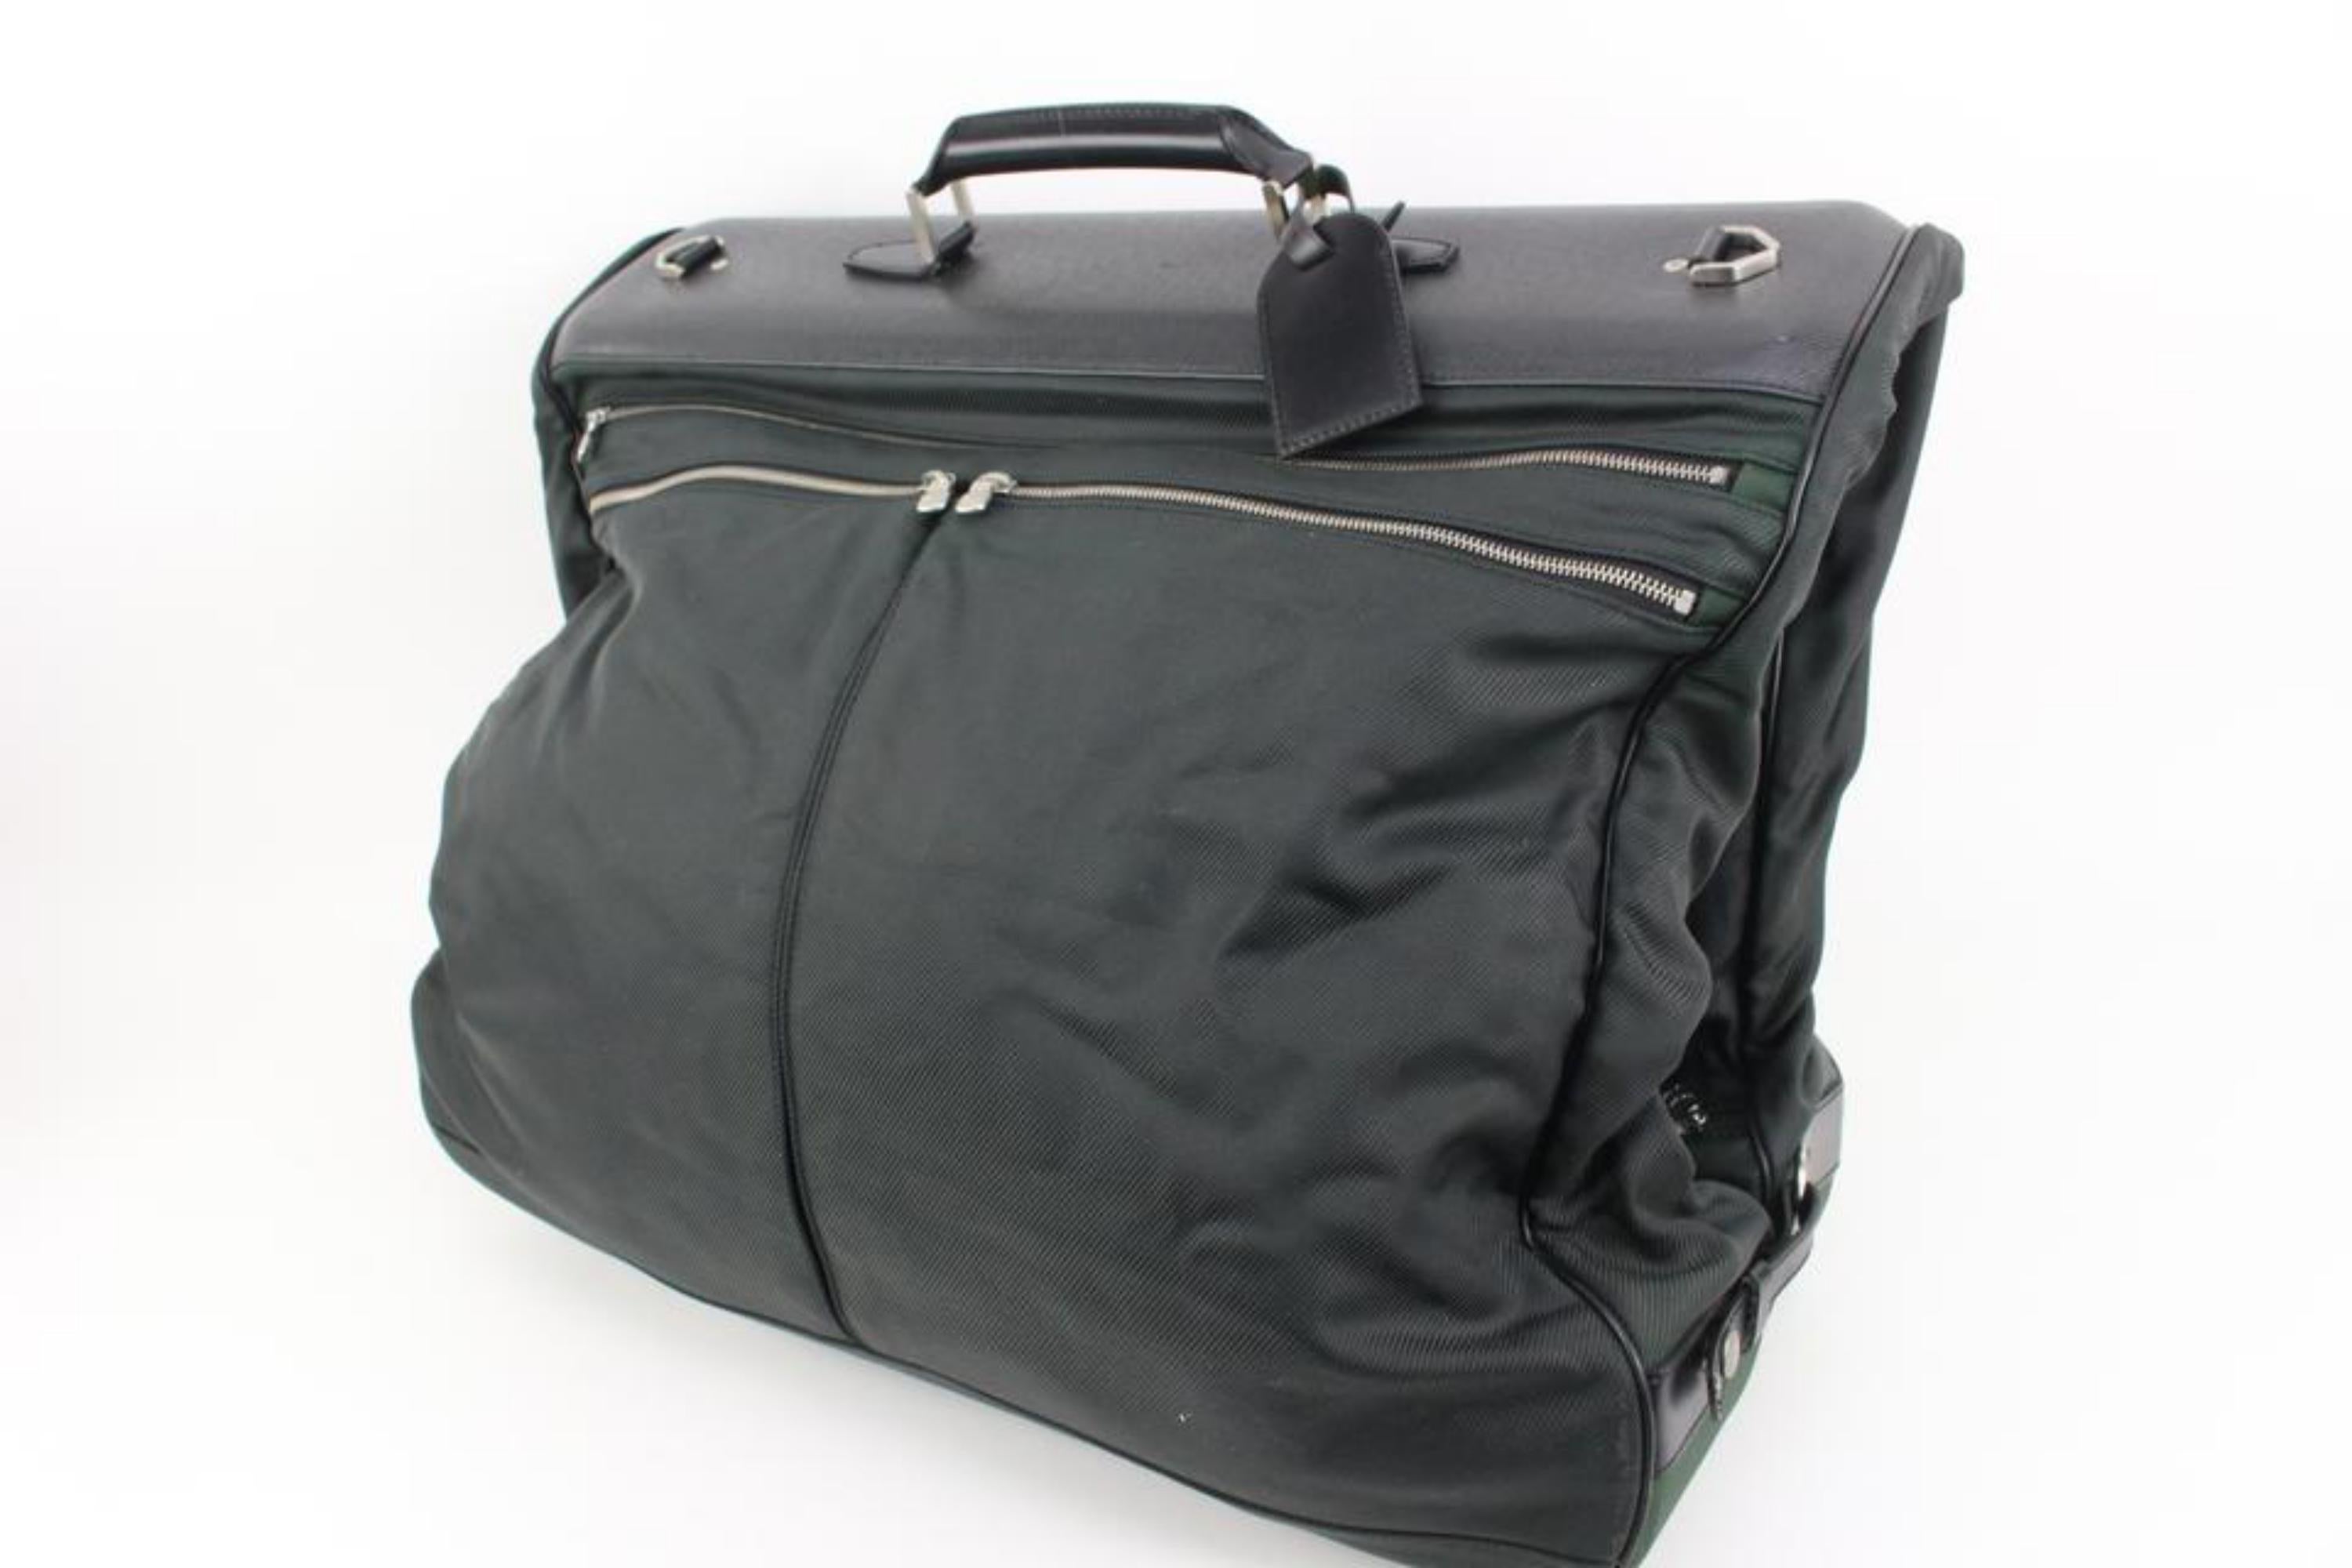 Louis Vuitton Green Santore Ardoise Garment Travel Bag 46lk324s
Date Code/Serial Number: BA0050
Made In: France
Measurements: Length:  23